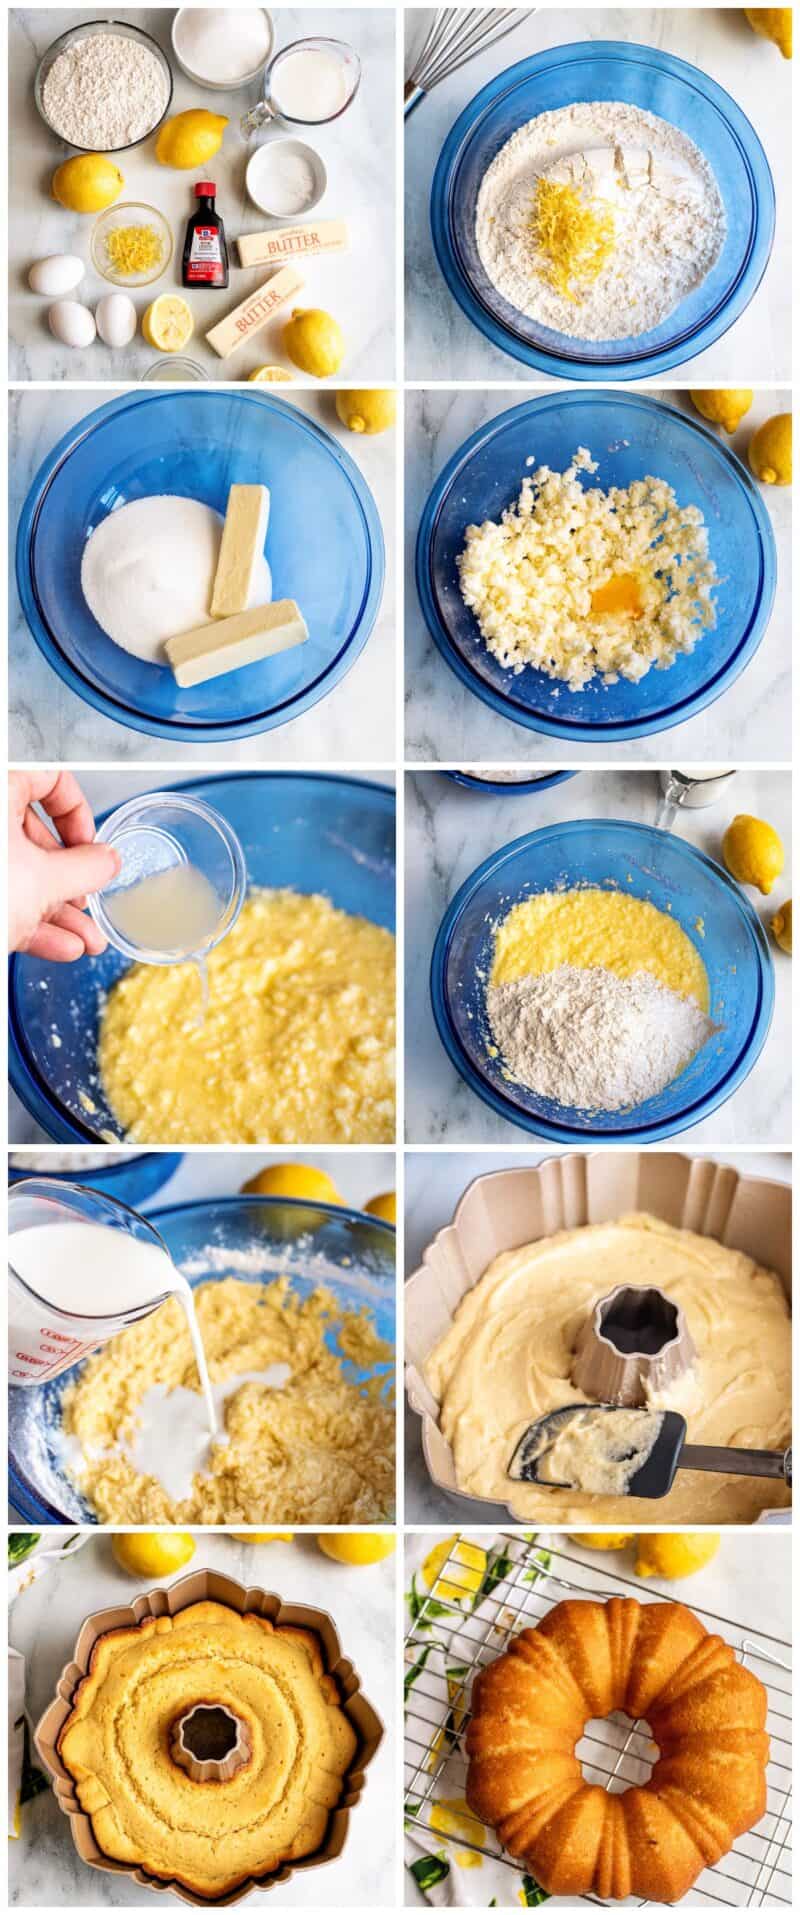 lemon bundt cake step by step recipe photos